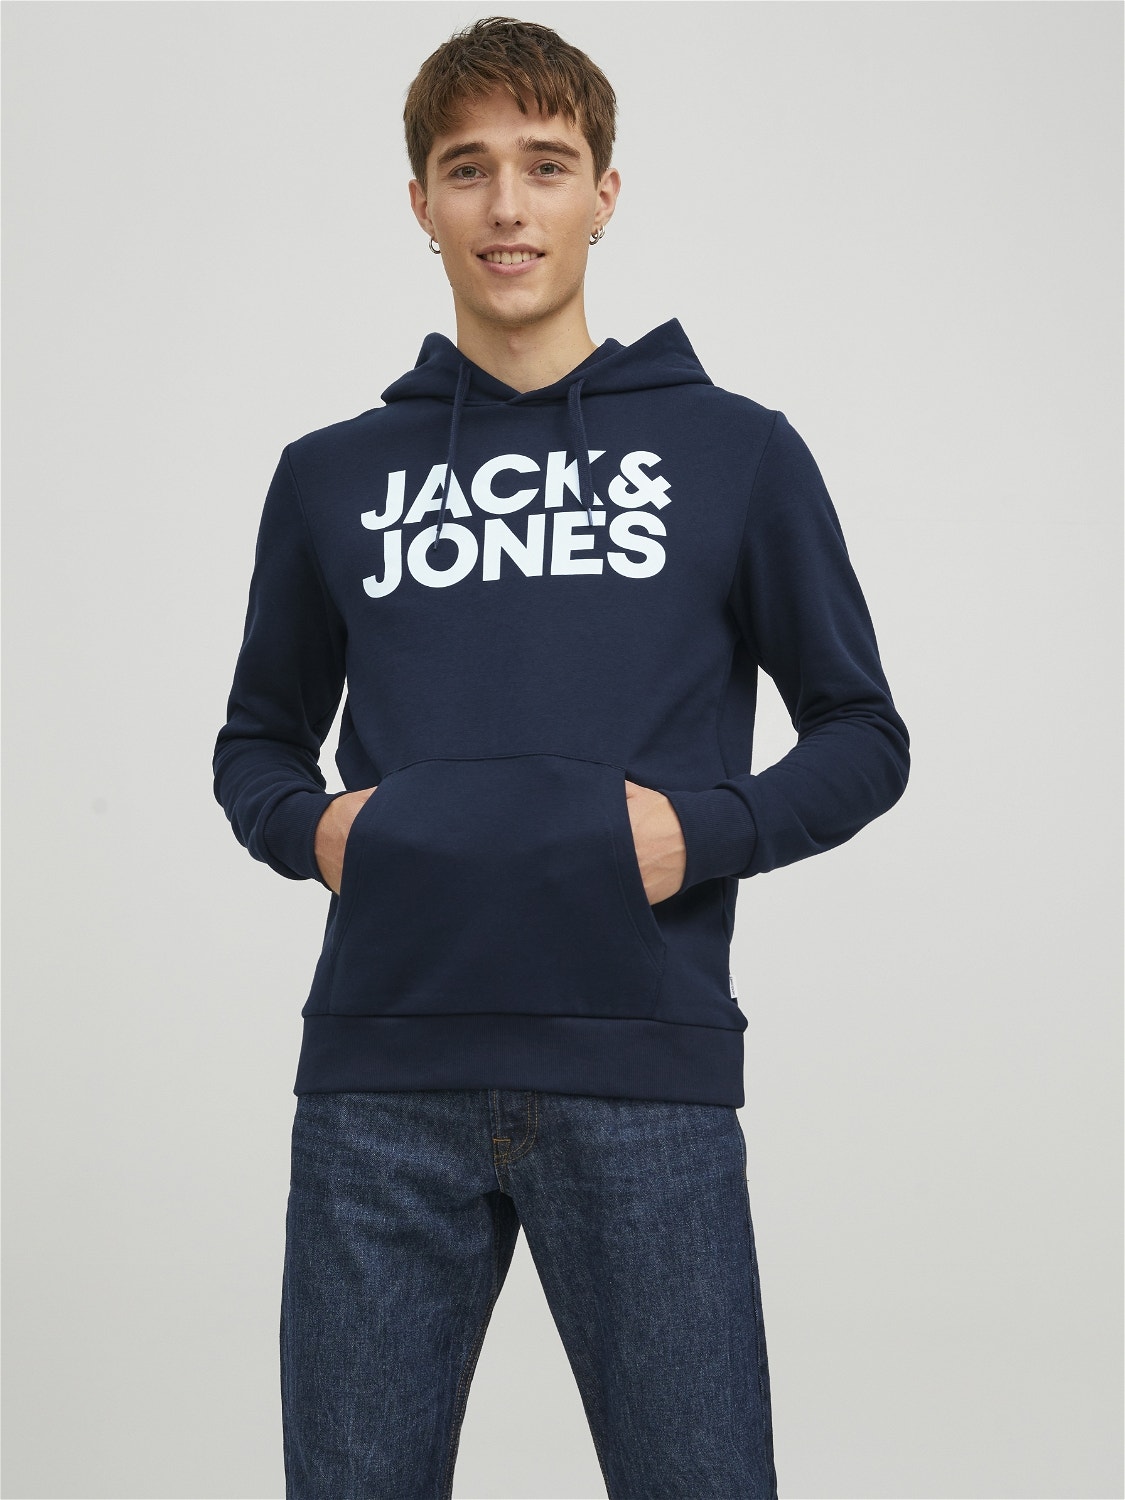 Jack & Jones Logo Kapuzenpullover -Navy Blazer - 12152840